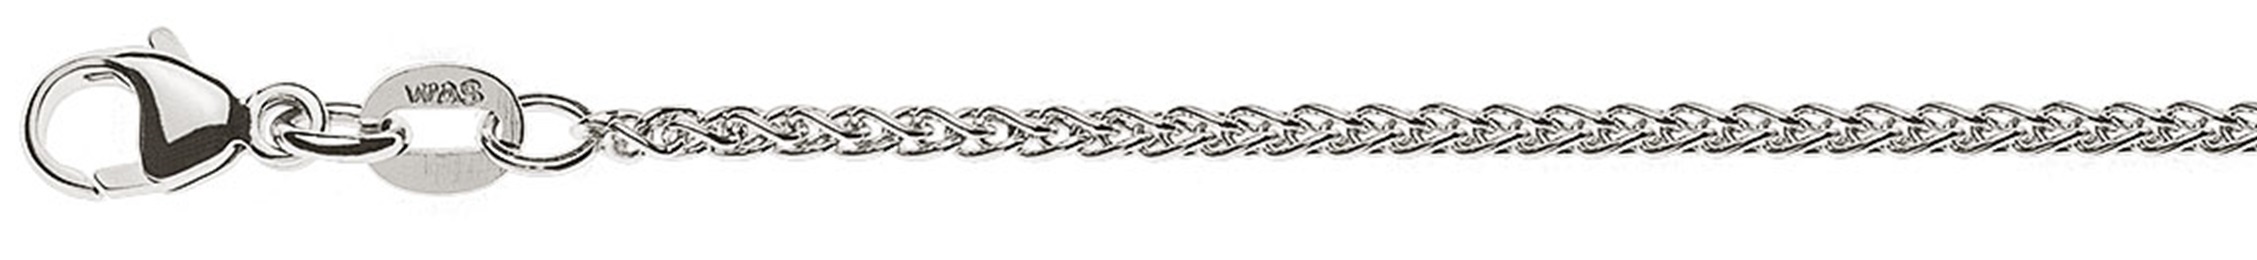 AURONOS Prestige Collier or blanc 18K chaîne câble 60cm 1.65mm